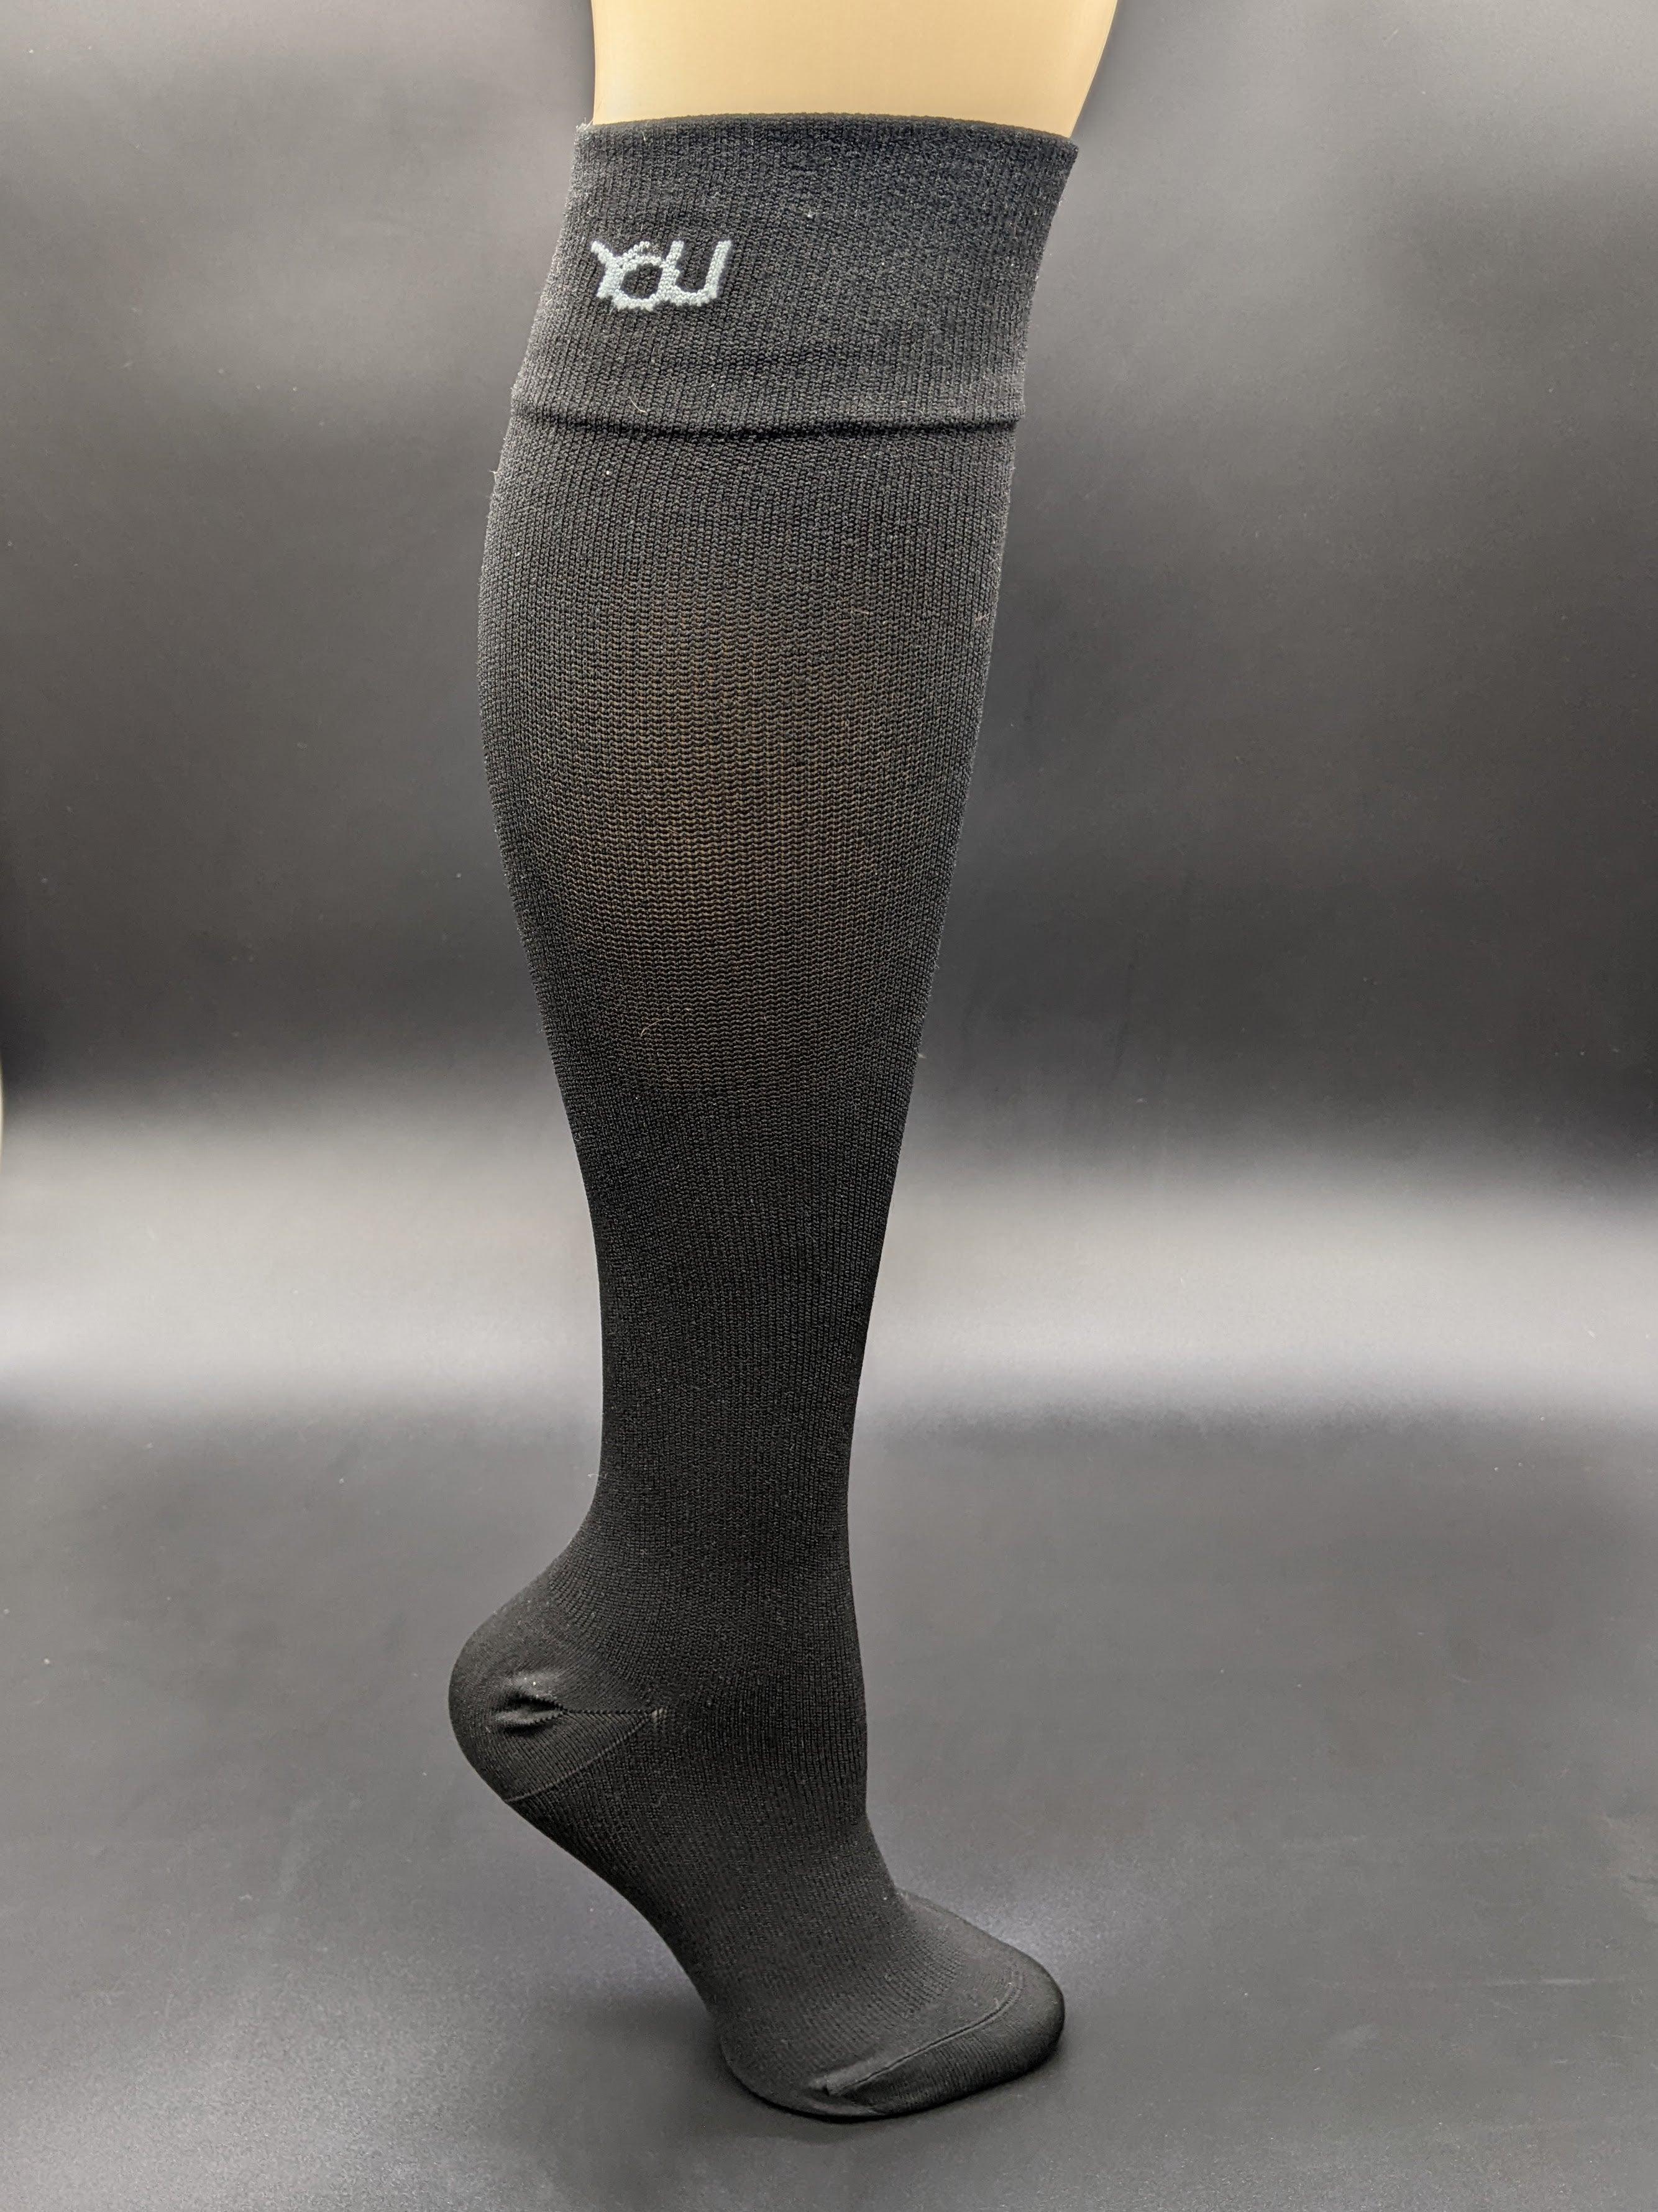 Buy the Medical Grade Compression Socks 20-30 mmHg - Knee High